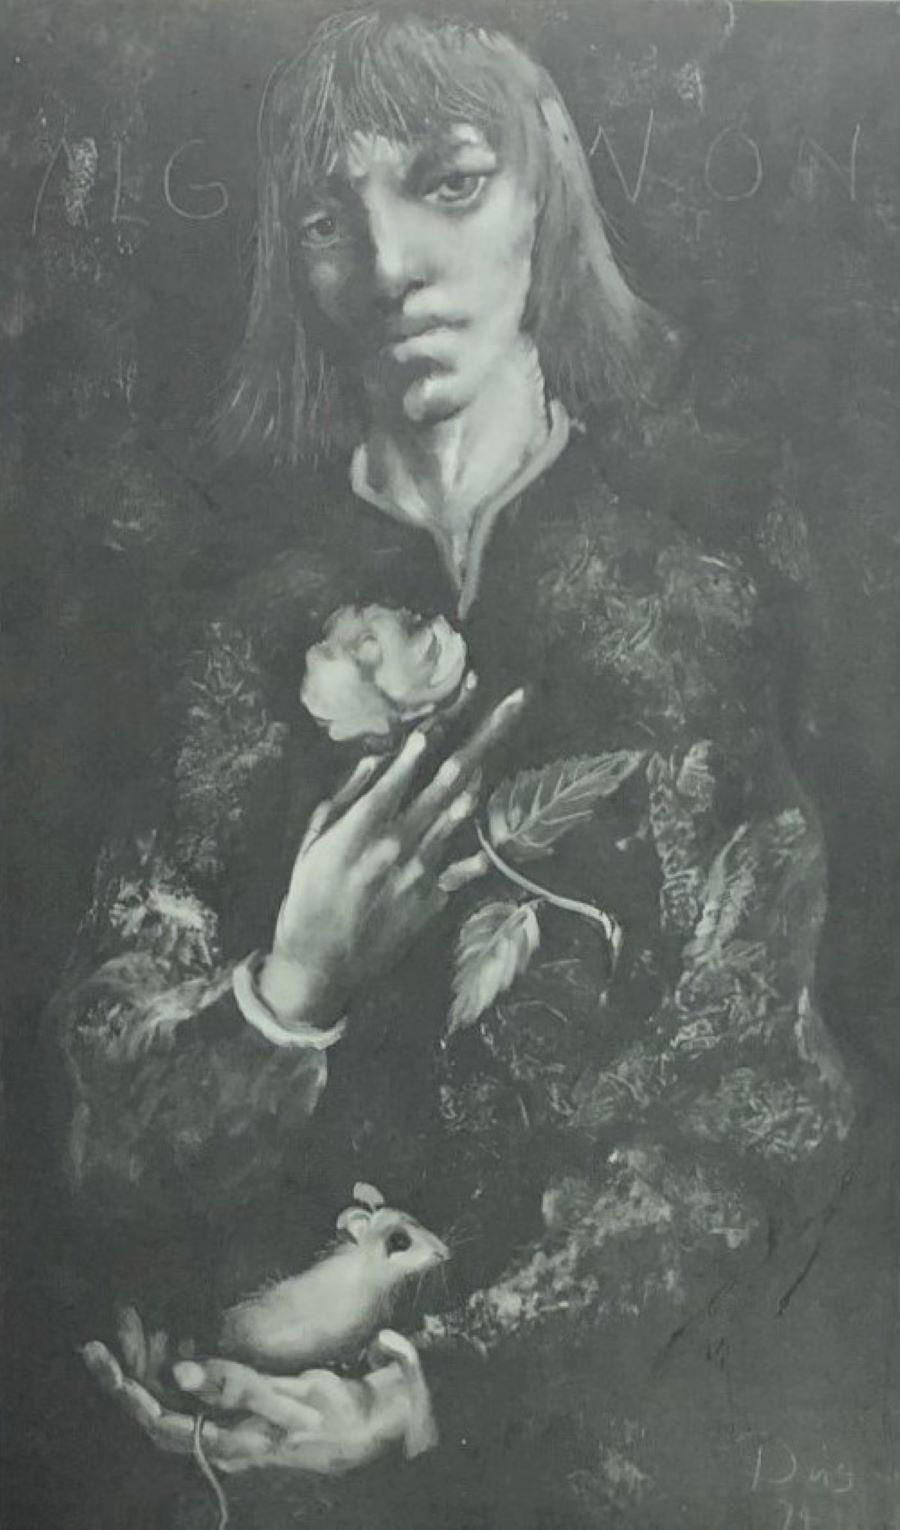 László Dús Portrait Print - (Title Unknown) Algernon-Limited Edition Lithograph, Pencil-signed and Numbered 